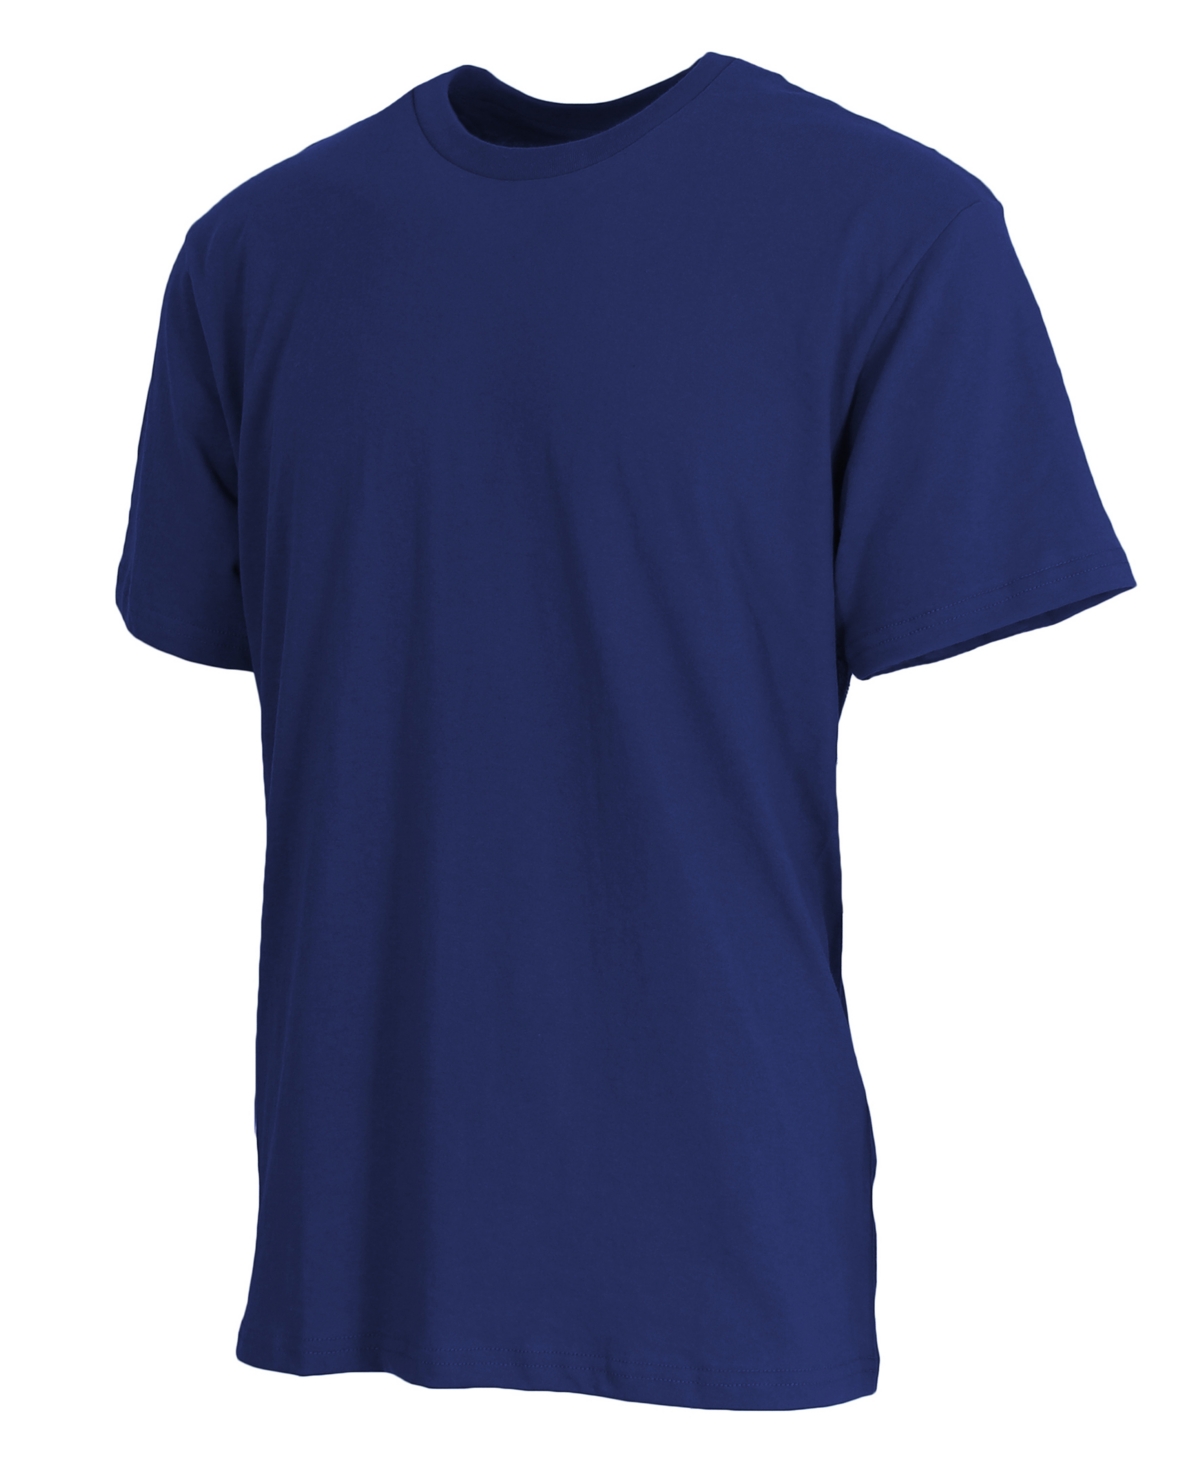 Men's Short Sleeve Crew Neck Classic T-shirt - Royal